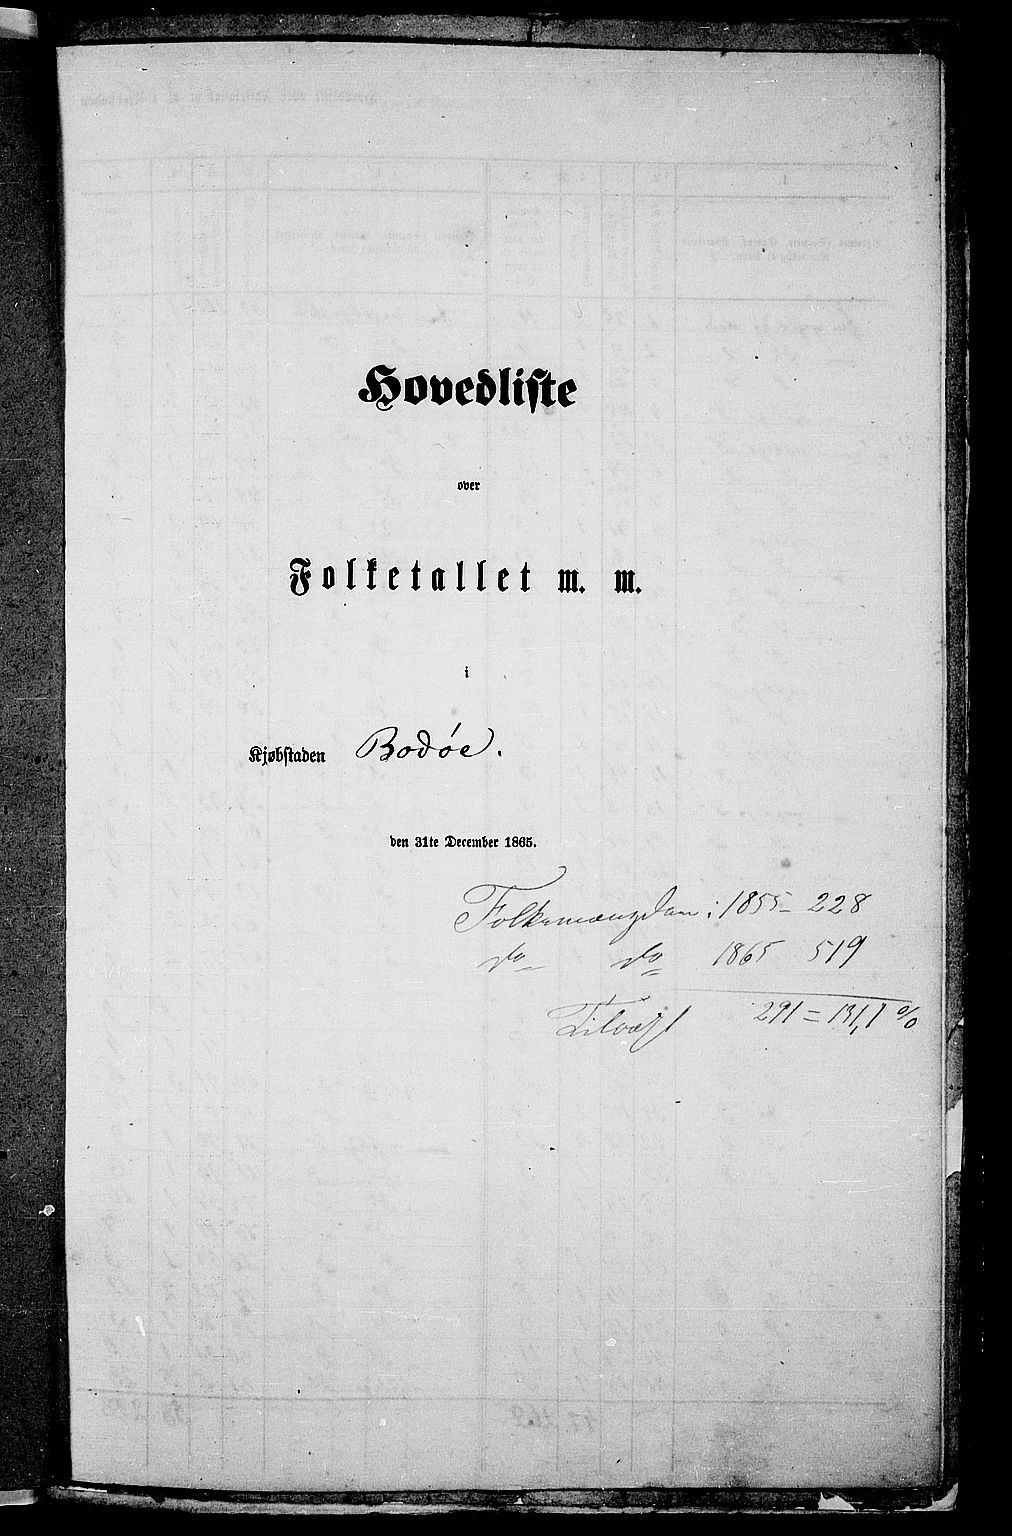 RA, Folketelling 1865 for 1804B Bodø prestegjeld, Bodø kjøpstad, 1865, s. 3